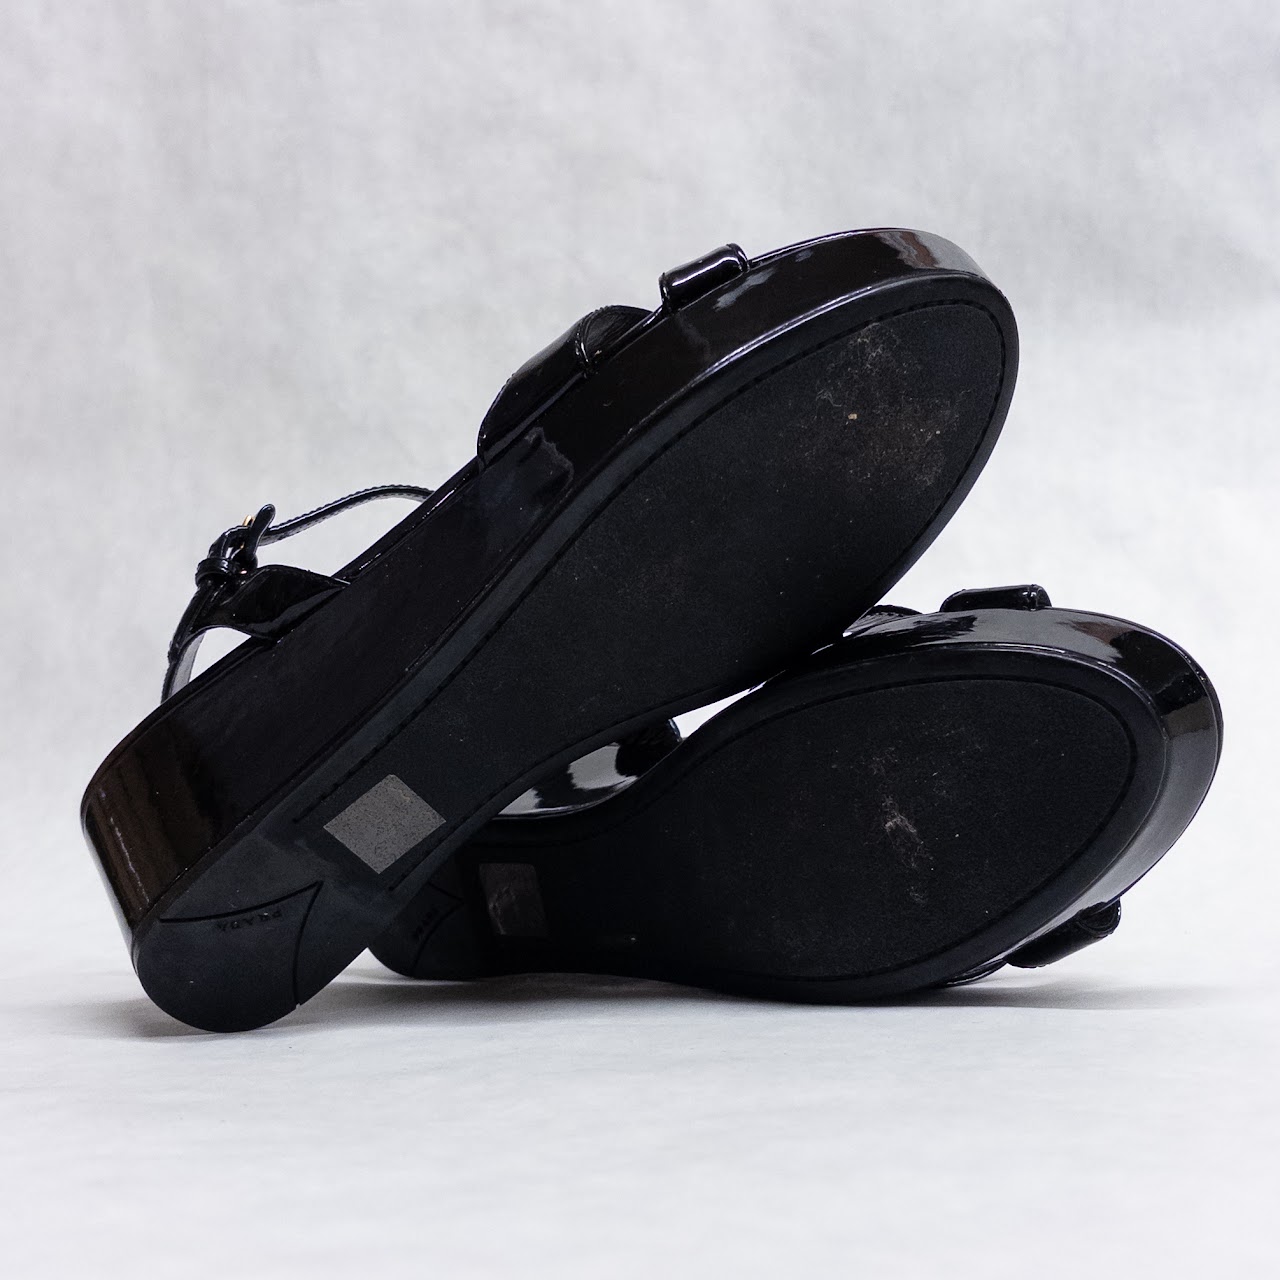 Prada Patent Leather Platform Heels